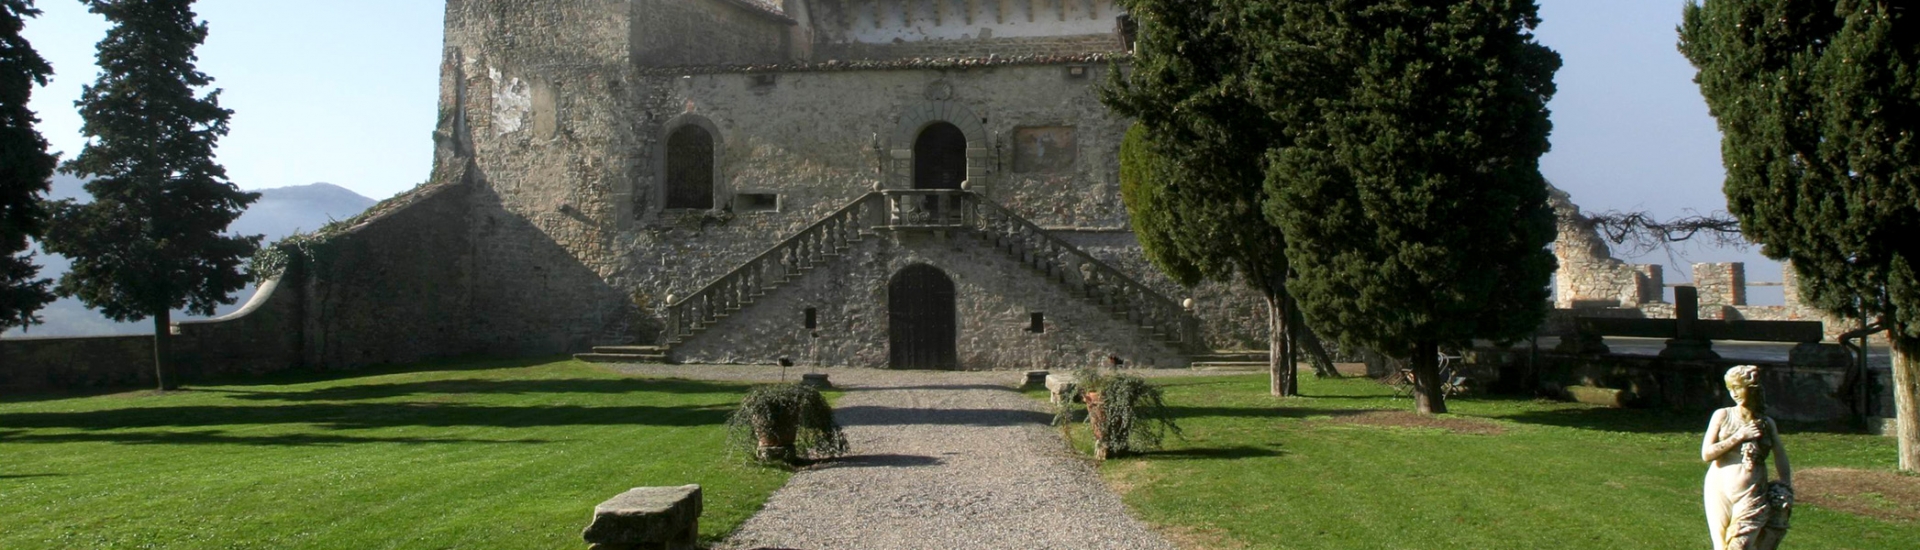 Rocca d'Olgisio - Castle of Olgisio photo credits: |Rocca d'Olgisio| - Castelli del Ducato